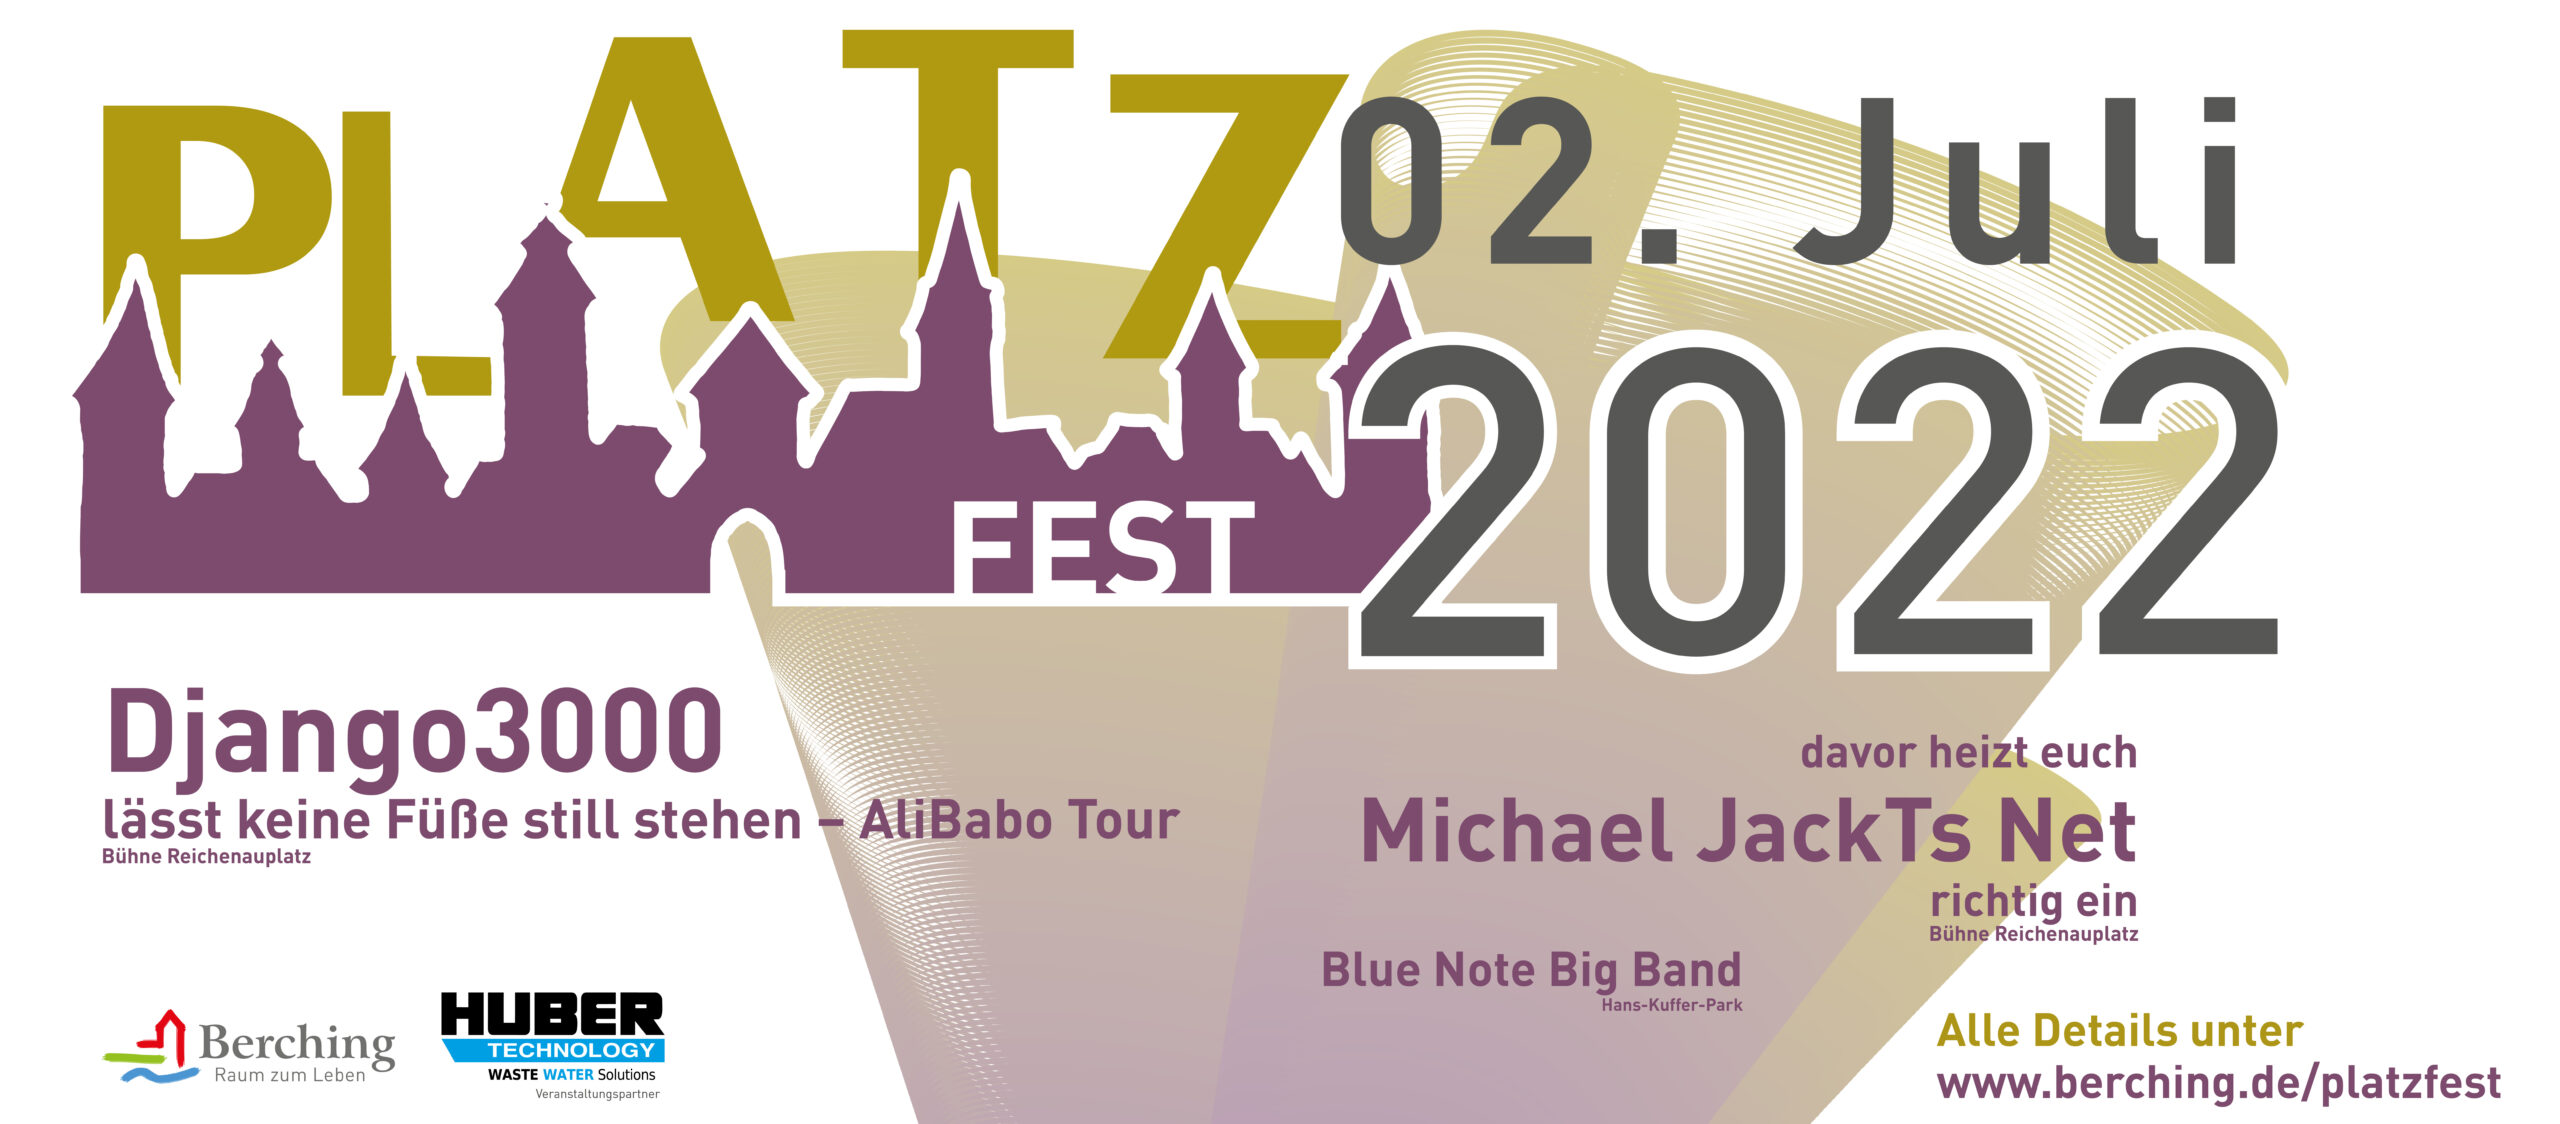 PLATZfest Berching 2.7.2022